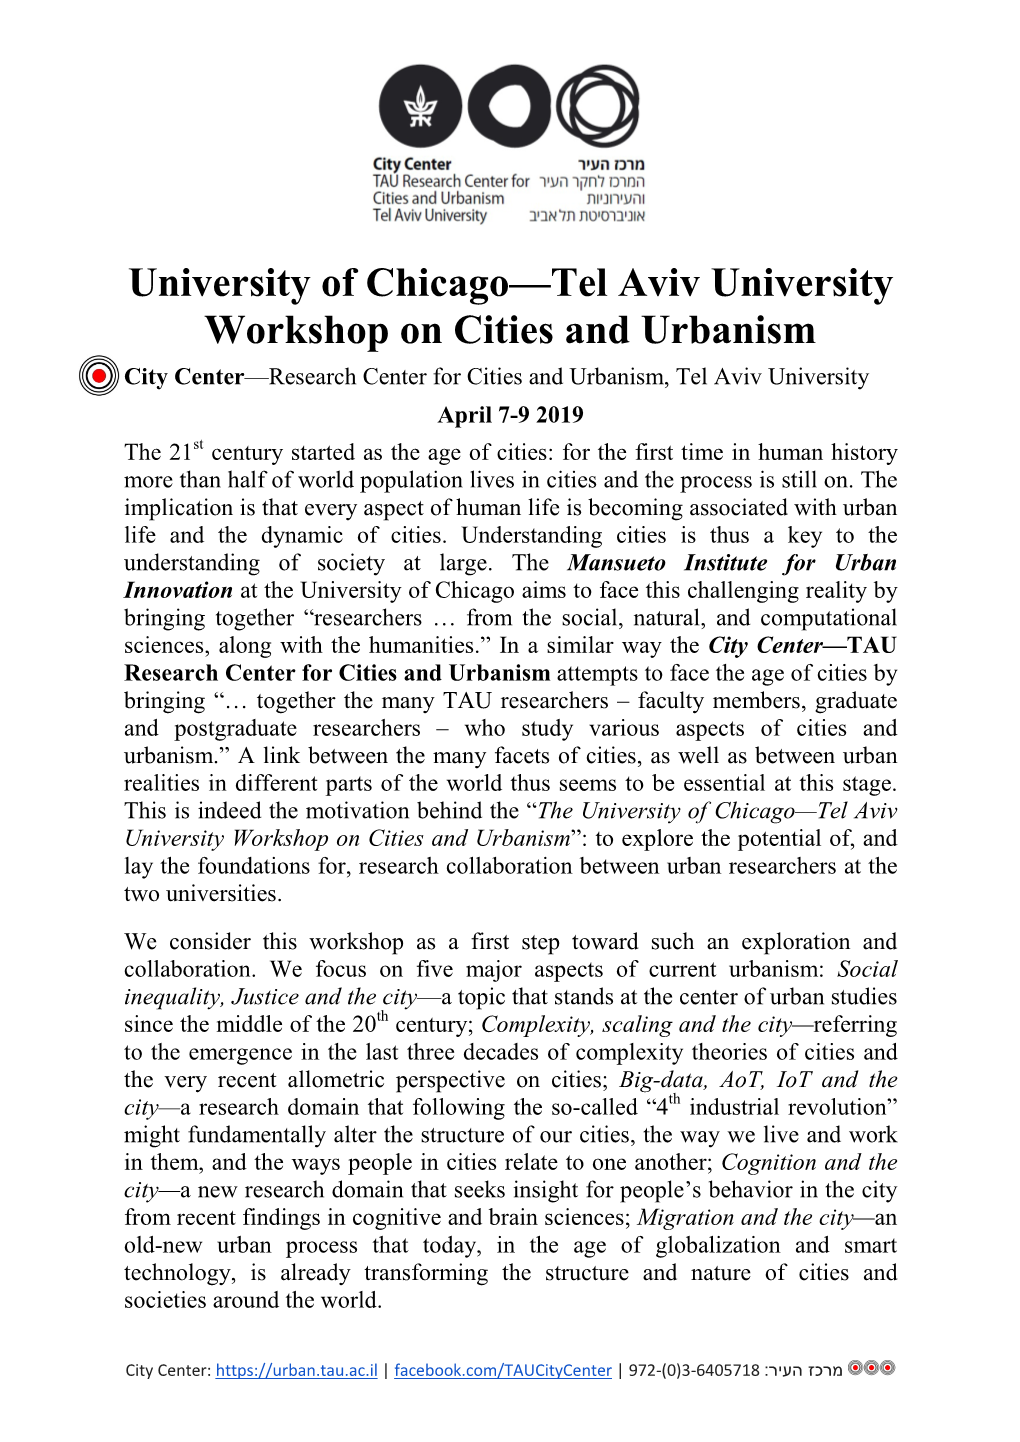 University of Chicago—Tel Aviv University Workshop on Cities And